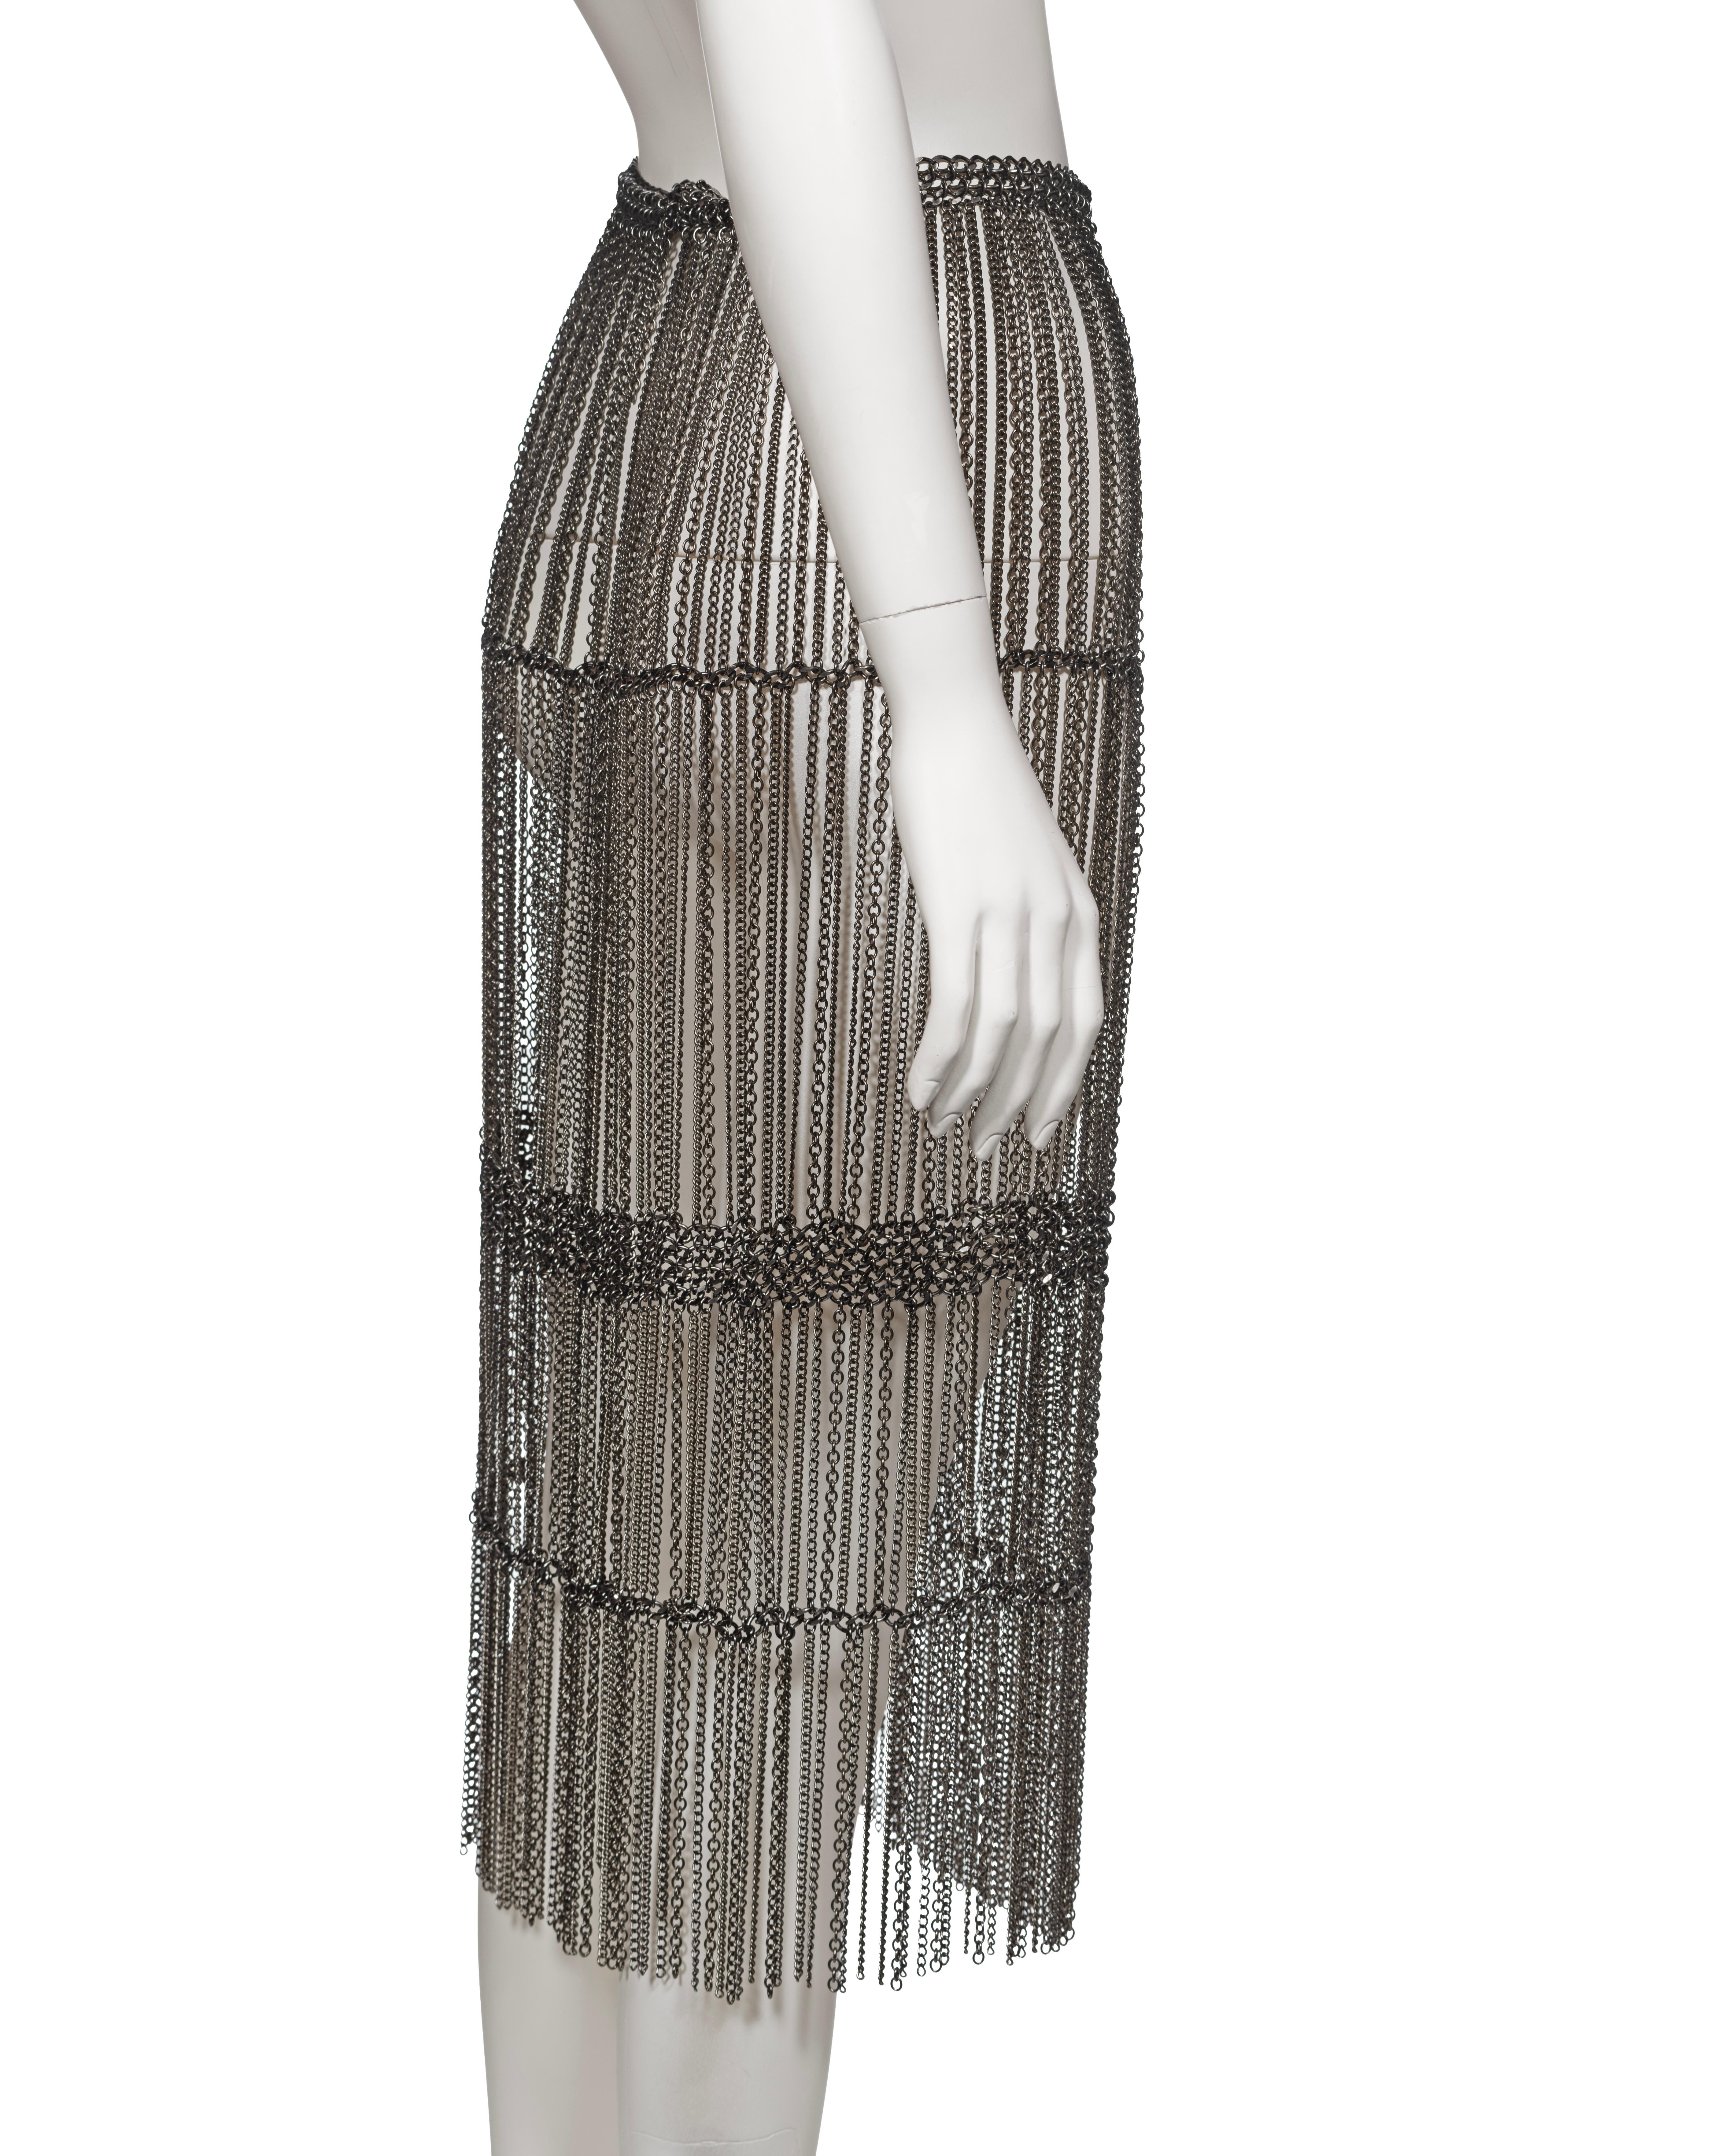 Prada by Miuccia Prada Silver Metal Chain Fringed Evening Skirt, fw 2002 For Sale 6